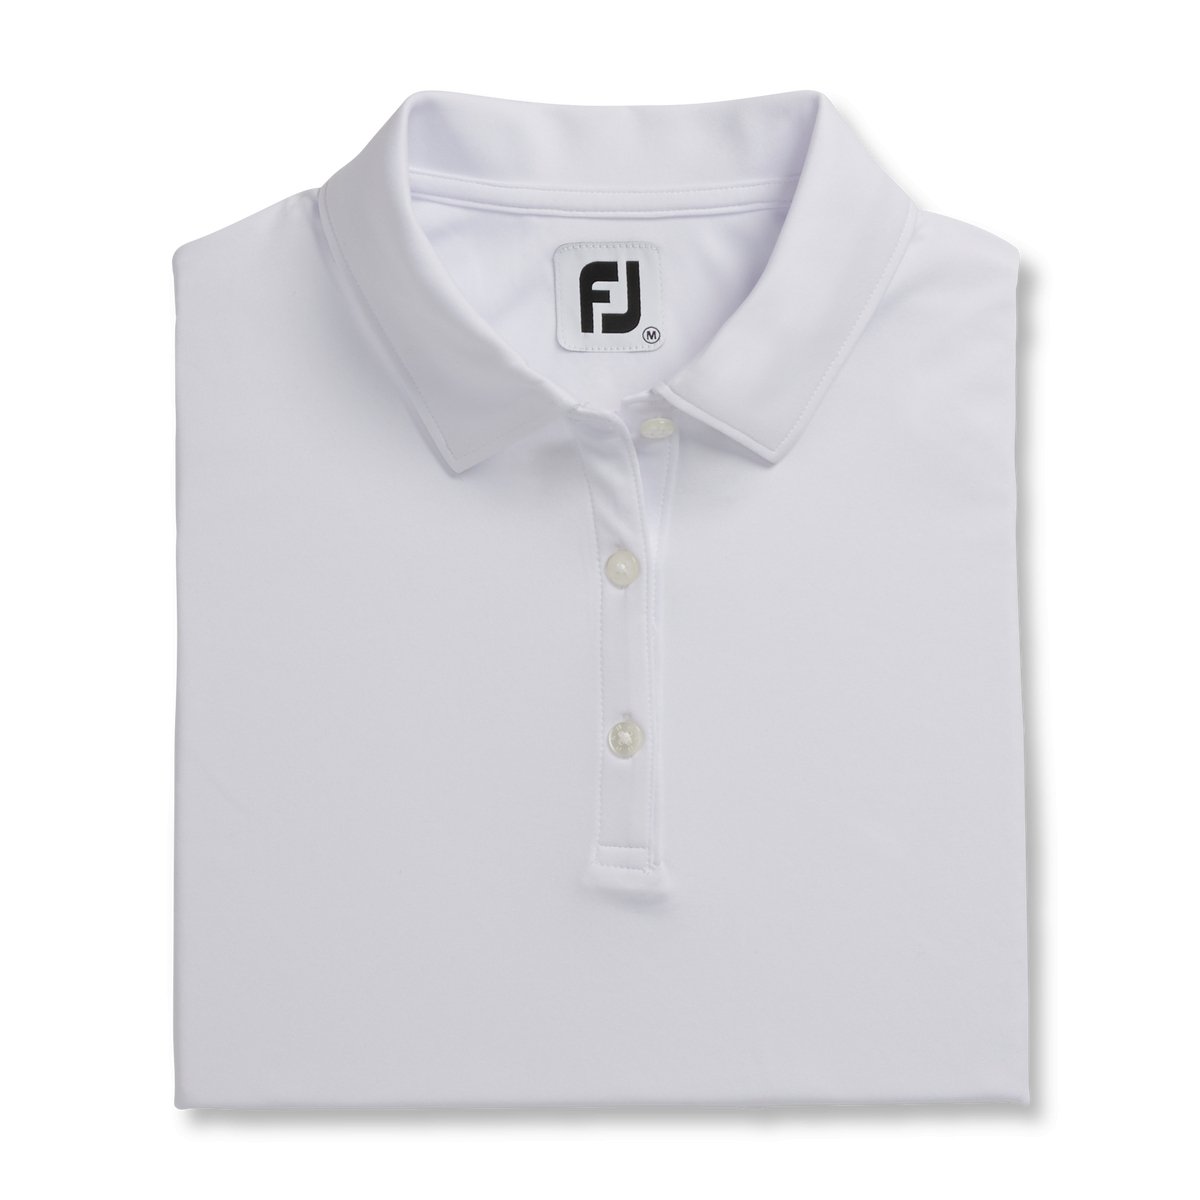 Footjoy ProDry Interlock Sleeveless Shirt Self Collar Women - Niagara Golf Warehouse FOOTJOY Women's Golf Shirt